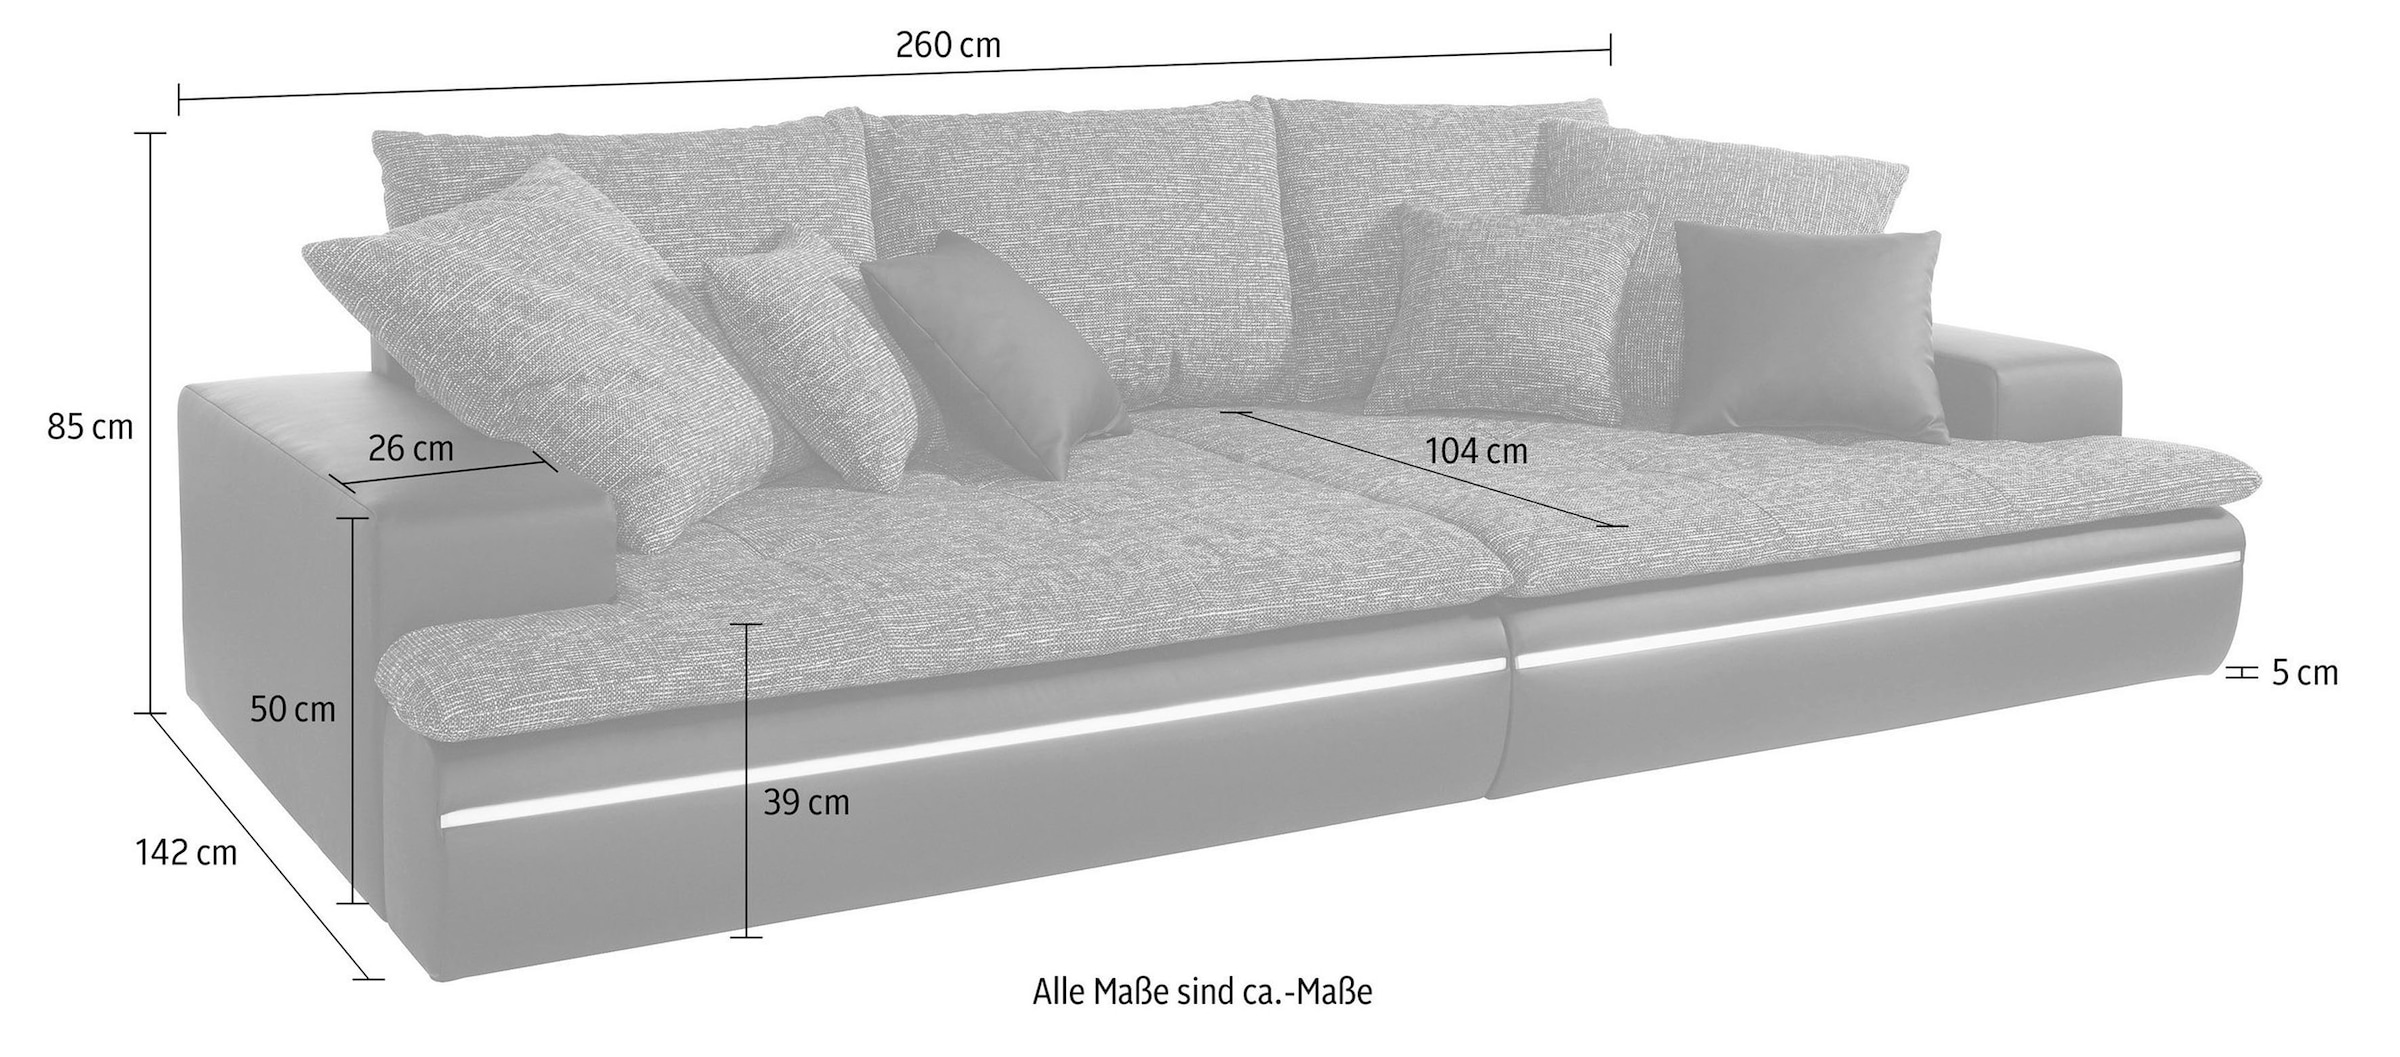 Mr. Couch Big-Sofa Haiti, wahlweise mit RGB-Beleuchtung